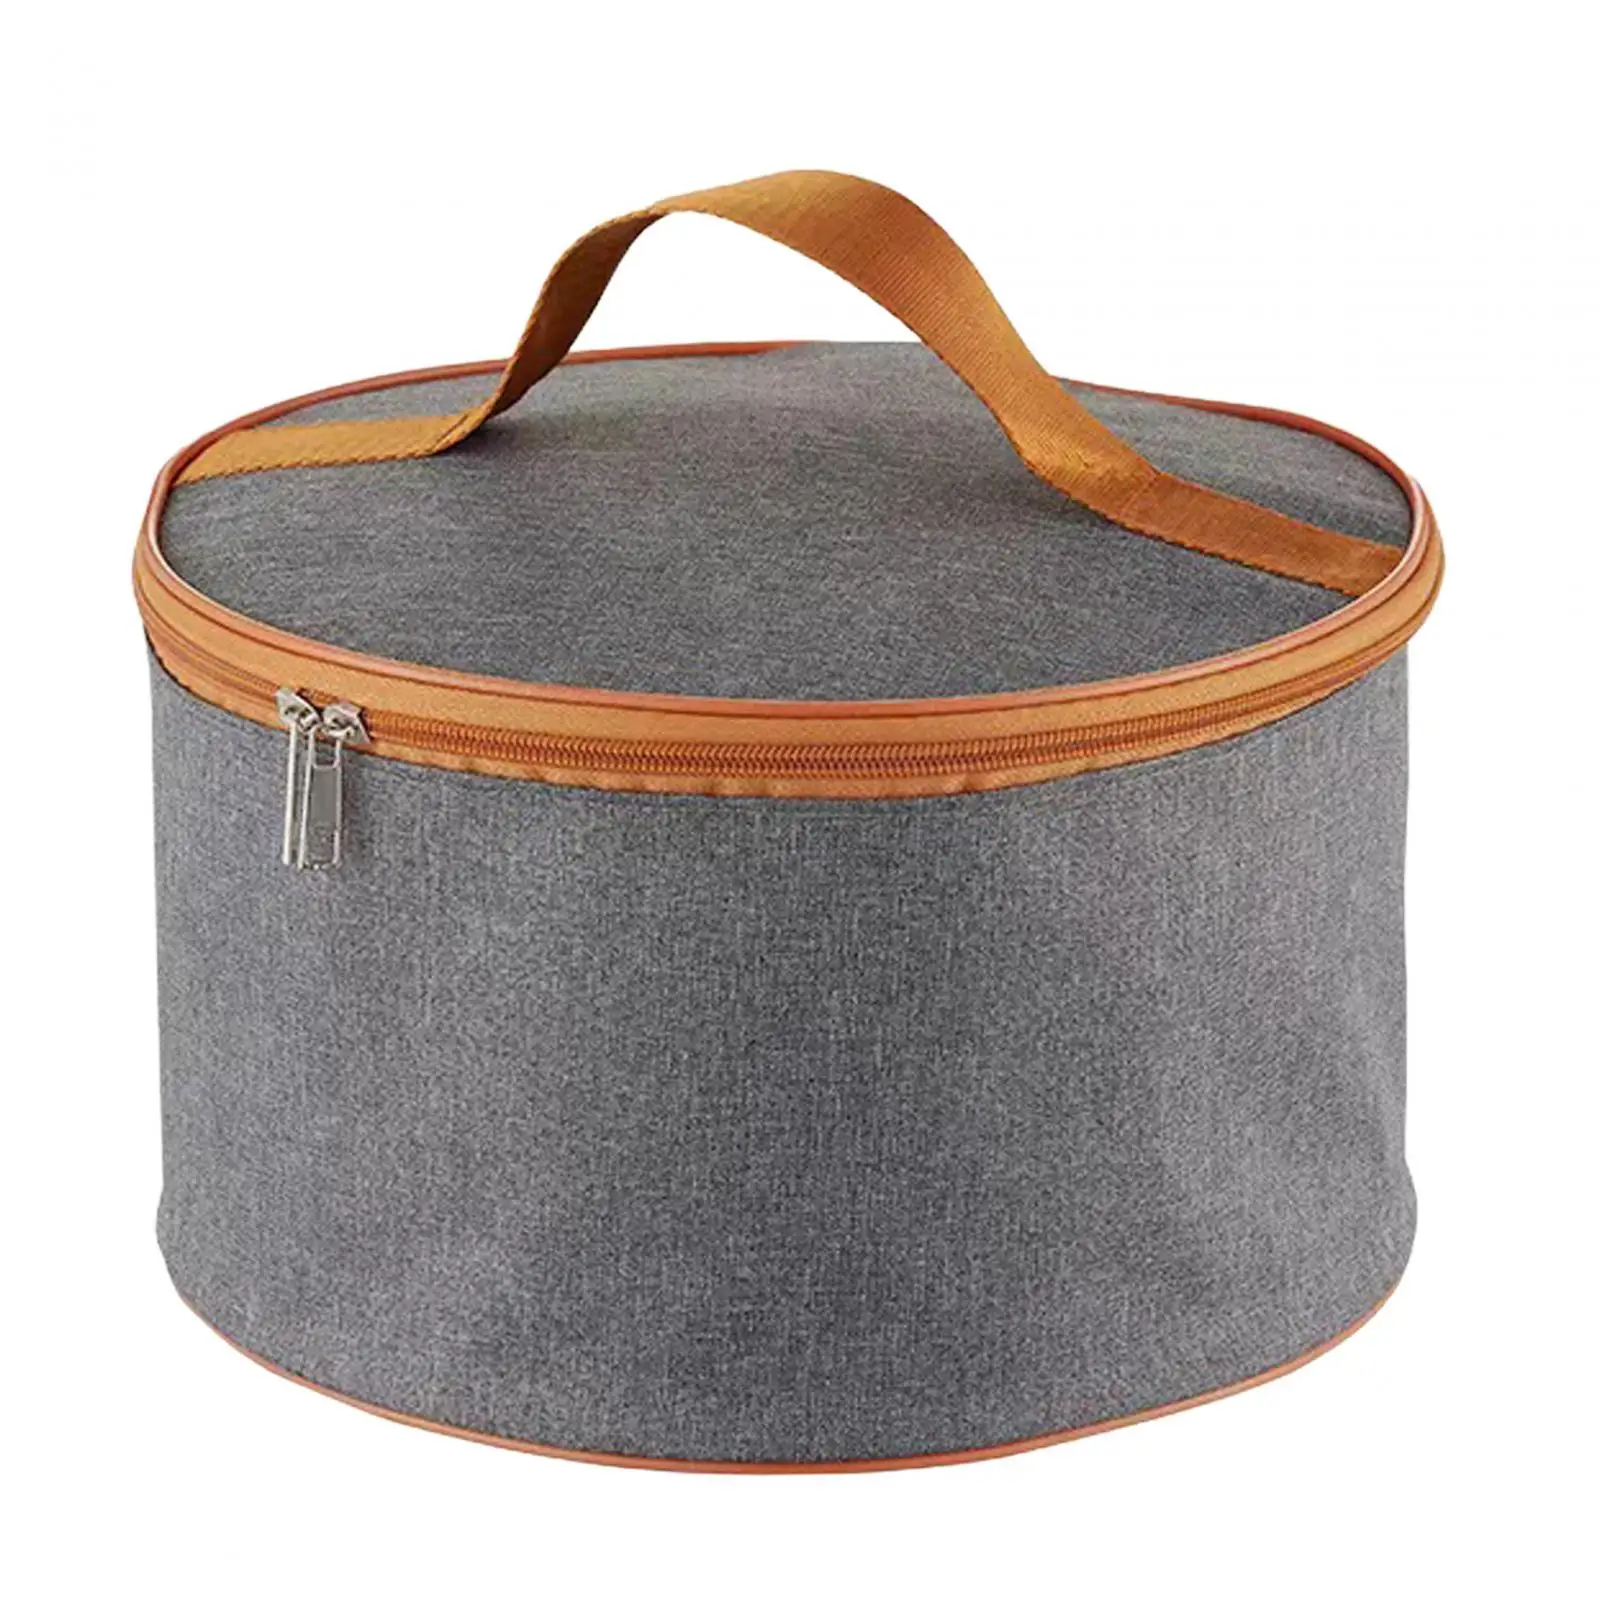 Camping Cookware Carry Bag Oxford Cloth Waterproof Camping Pot Storage Bag